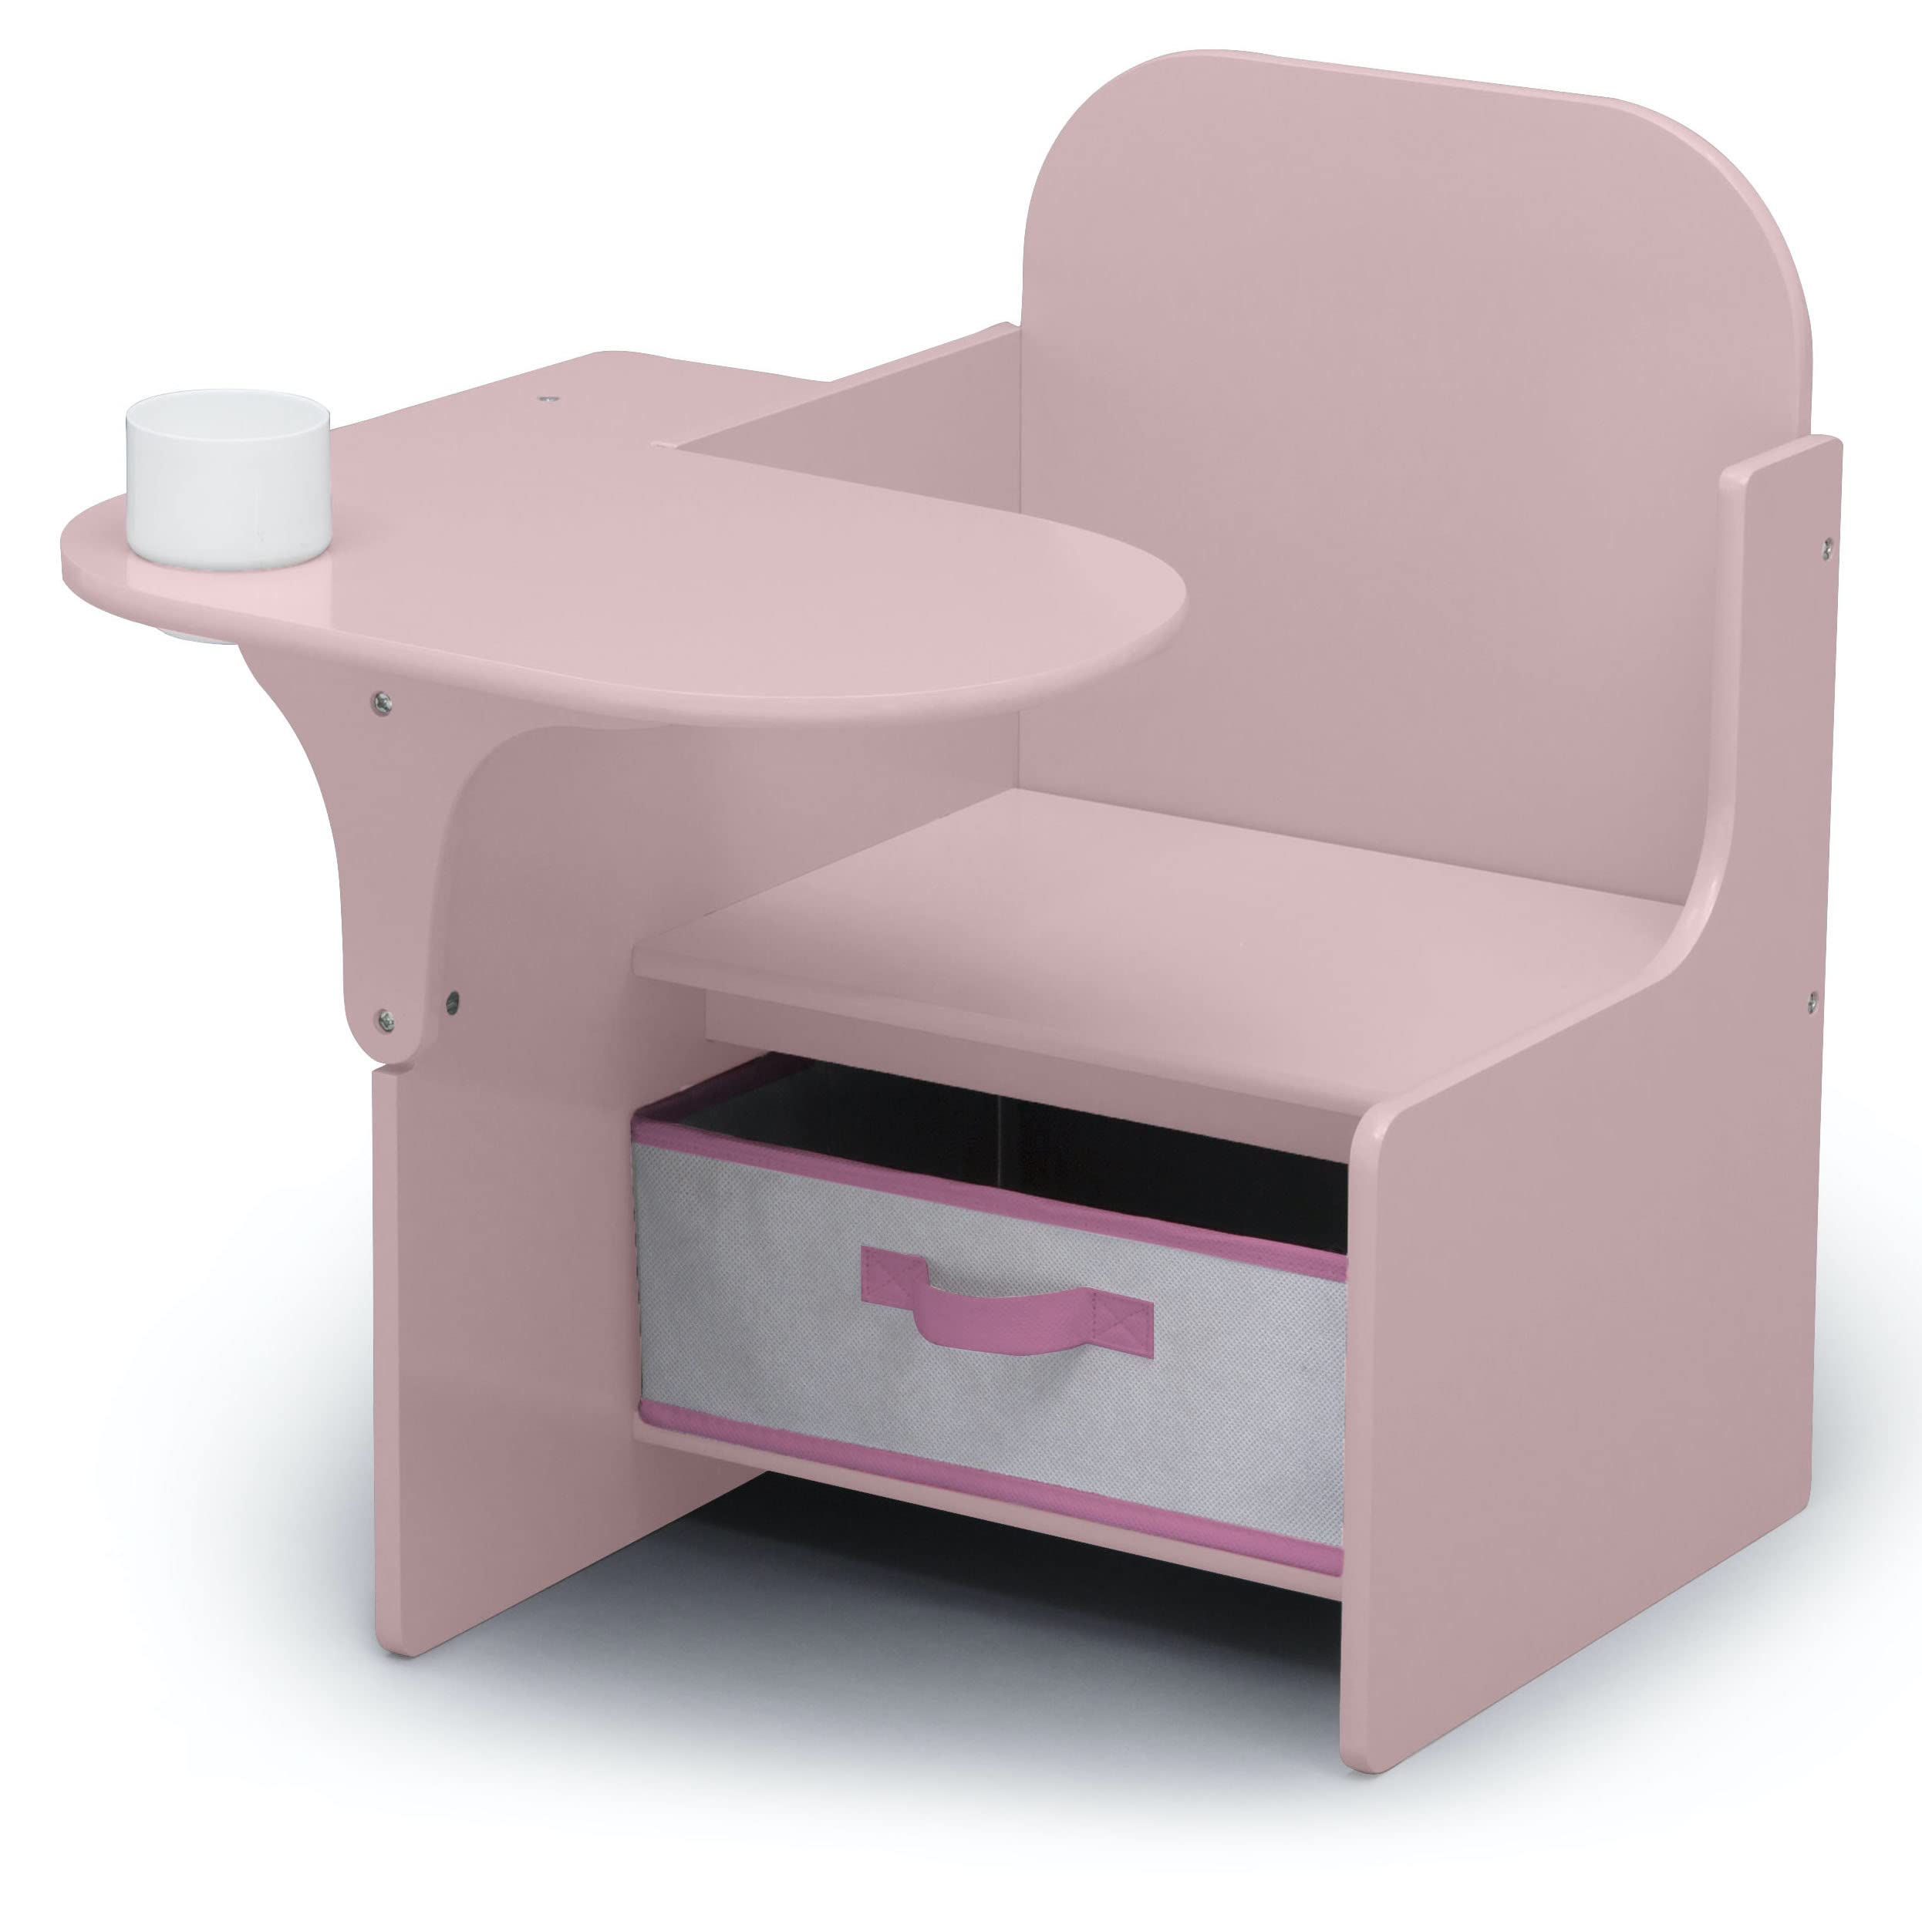 Delta children MySize chair Desk with Storage Bin - greenguard gold certified, Dusty Rose